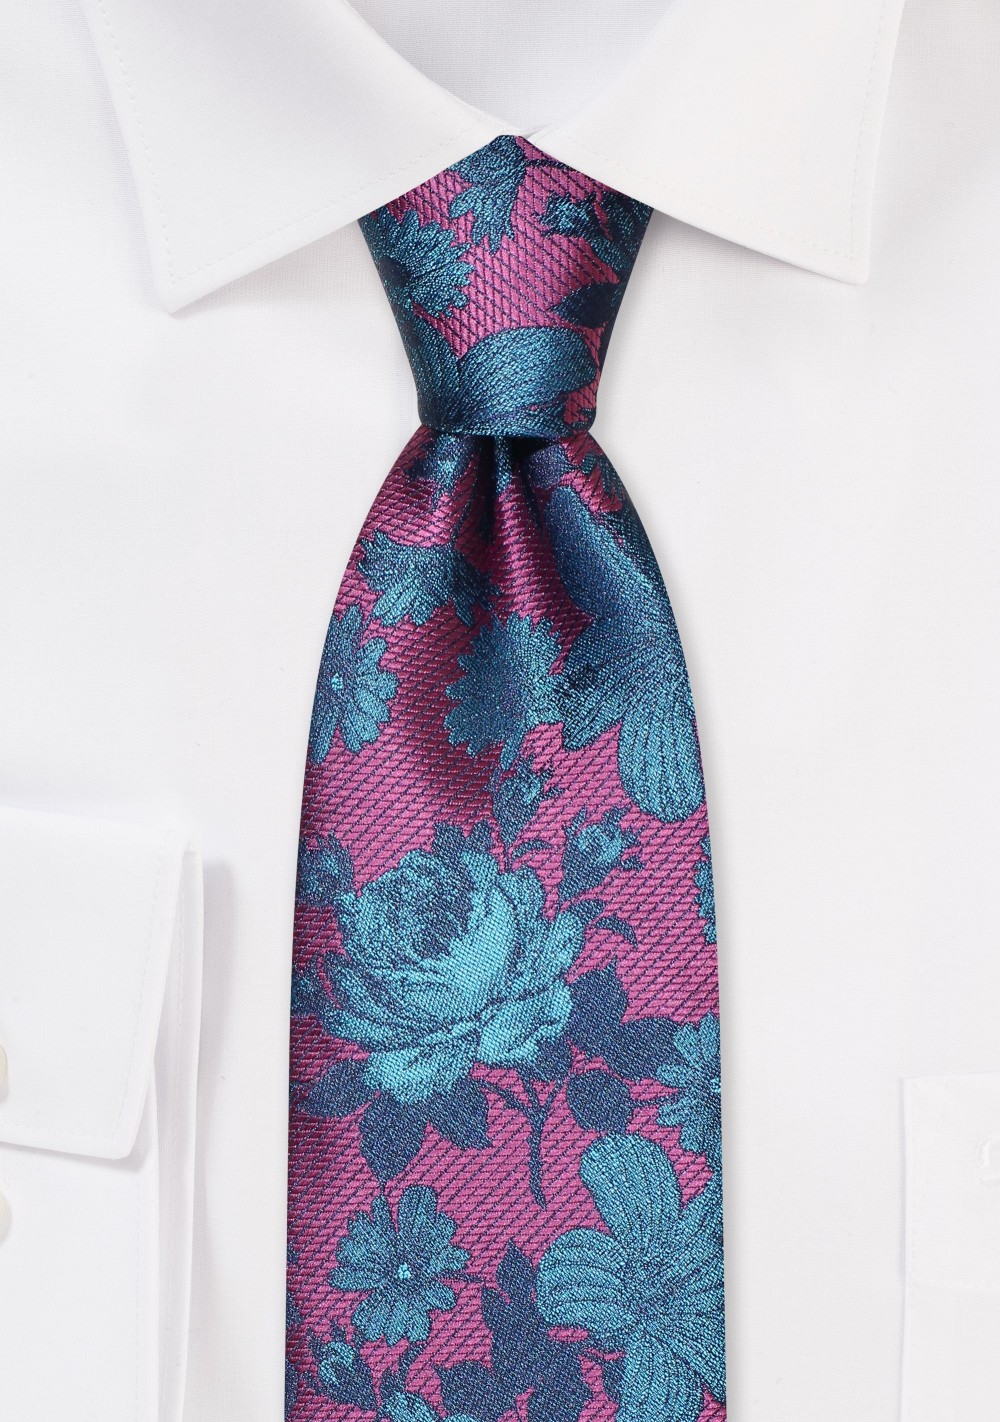 Slim Designer Tie in Berry with Teal Floral Weave